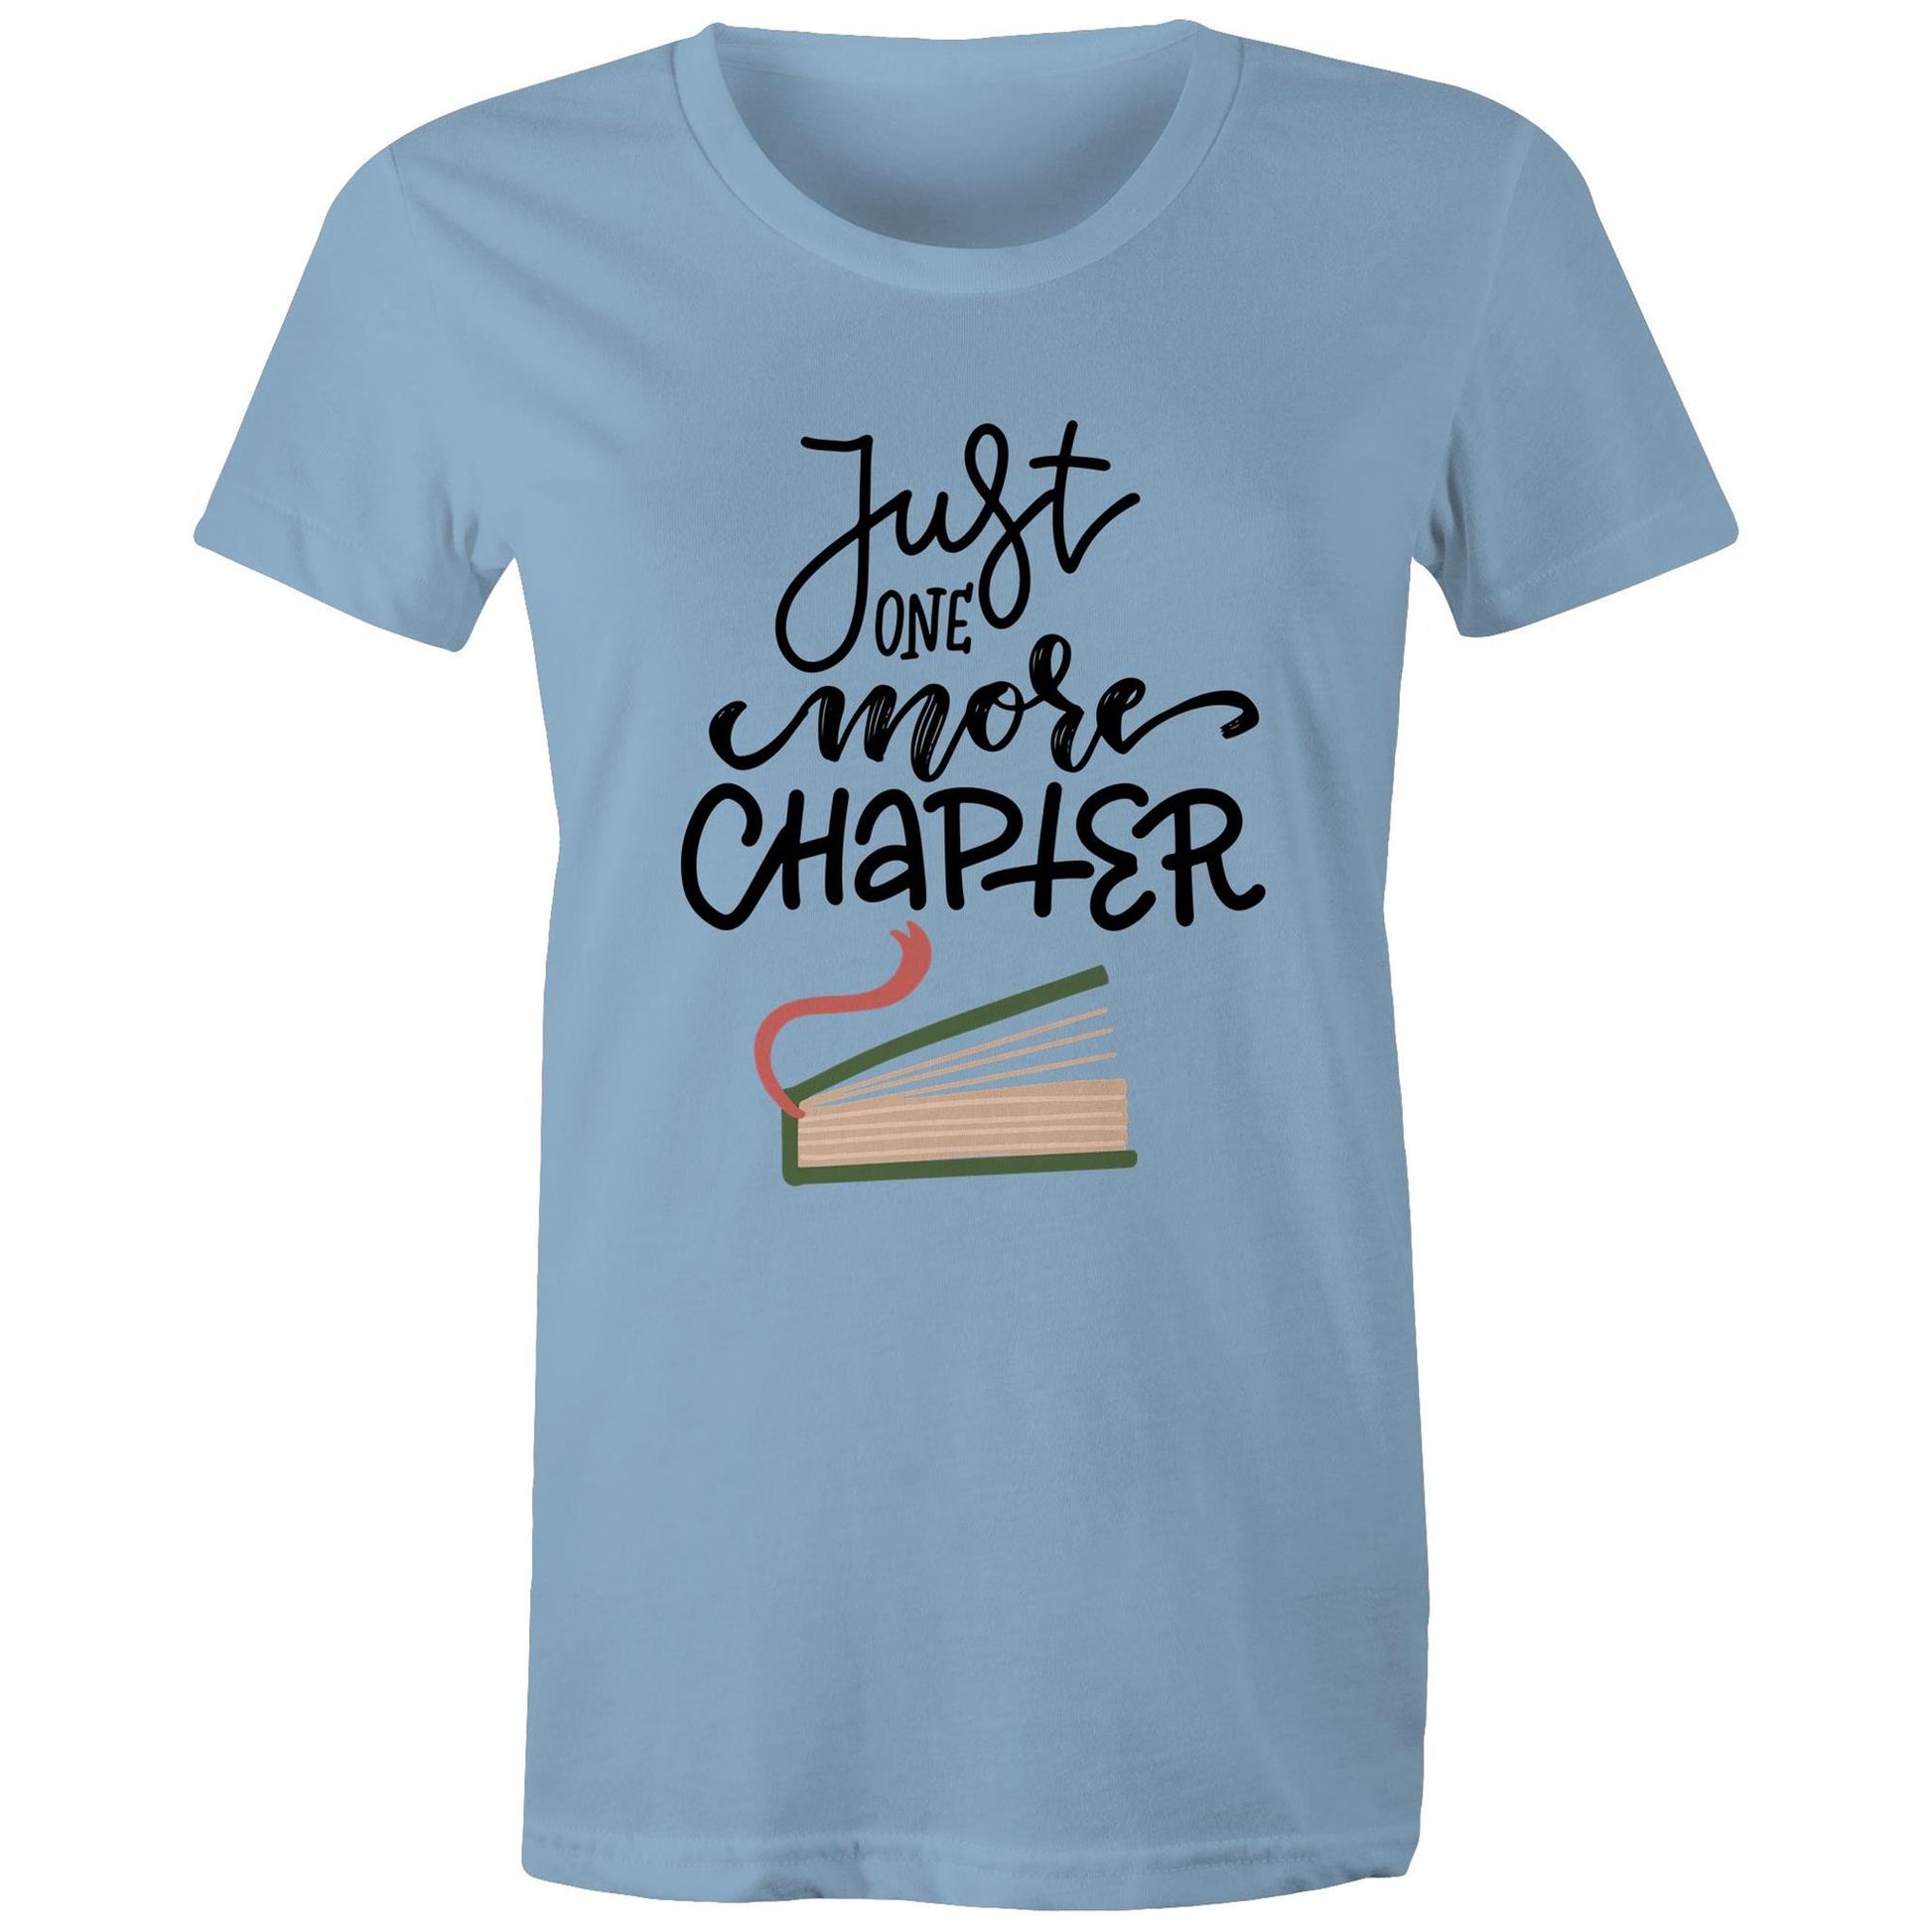 Just One More Chapter - Womens T-shirt Carolina Blue Womens T-shirt Reading